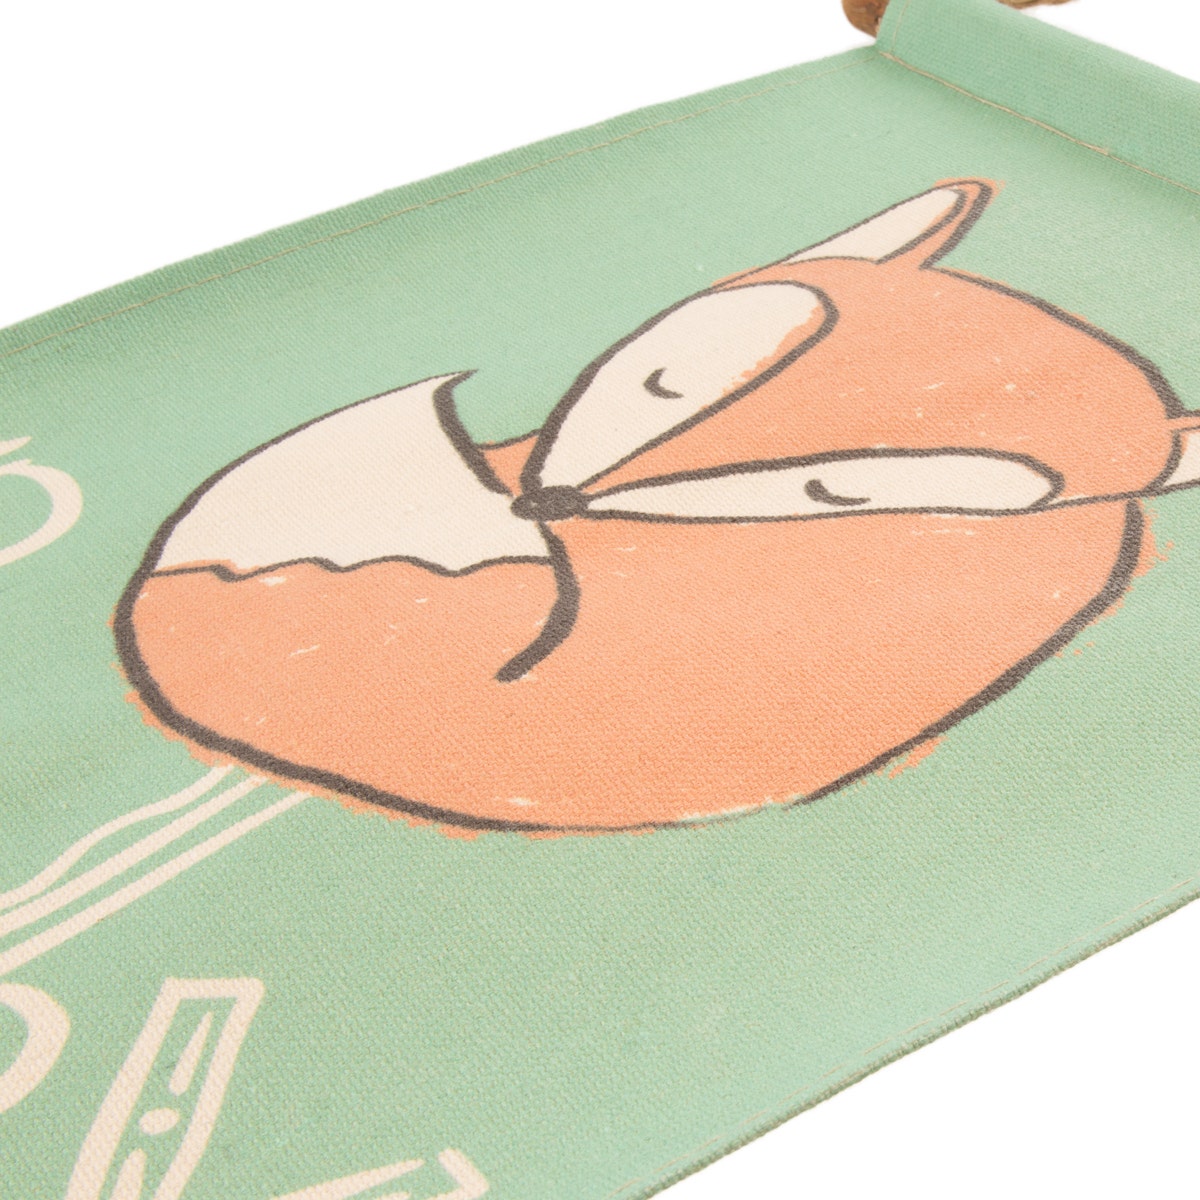 Baby Fox Scroll Wall Banner By Tag – Cute Nursery Room Décor!